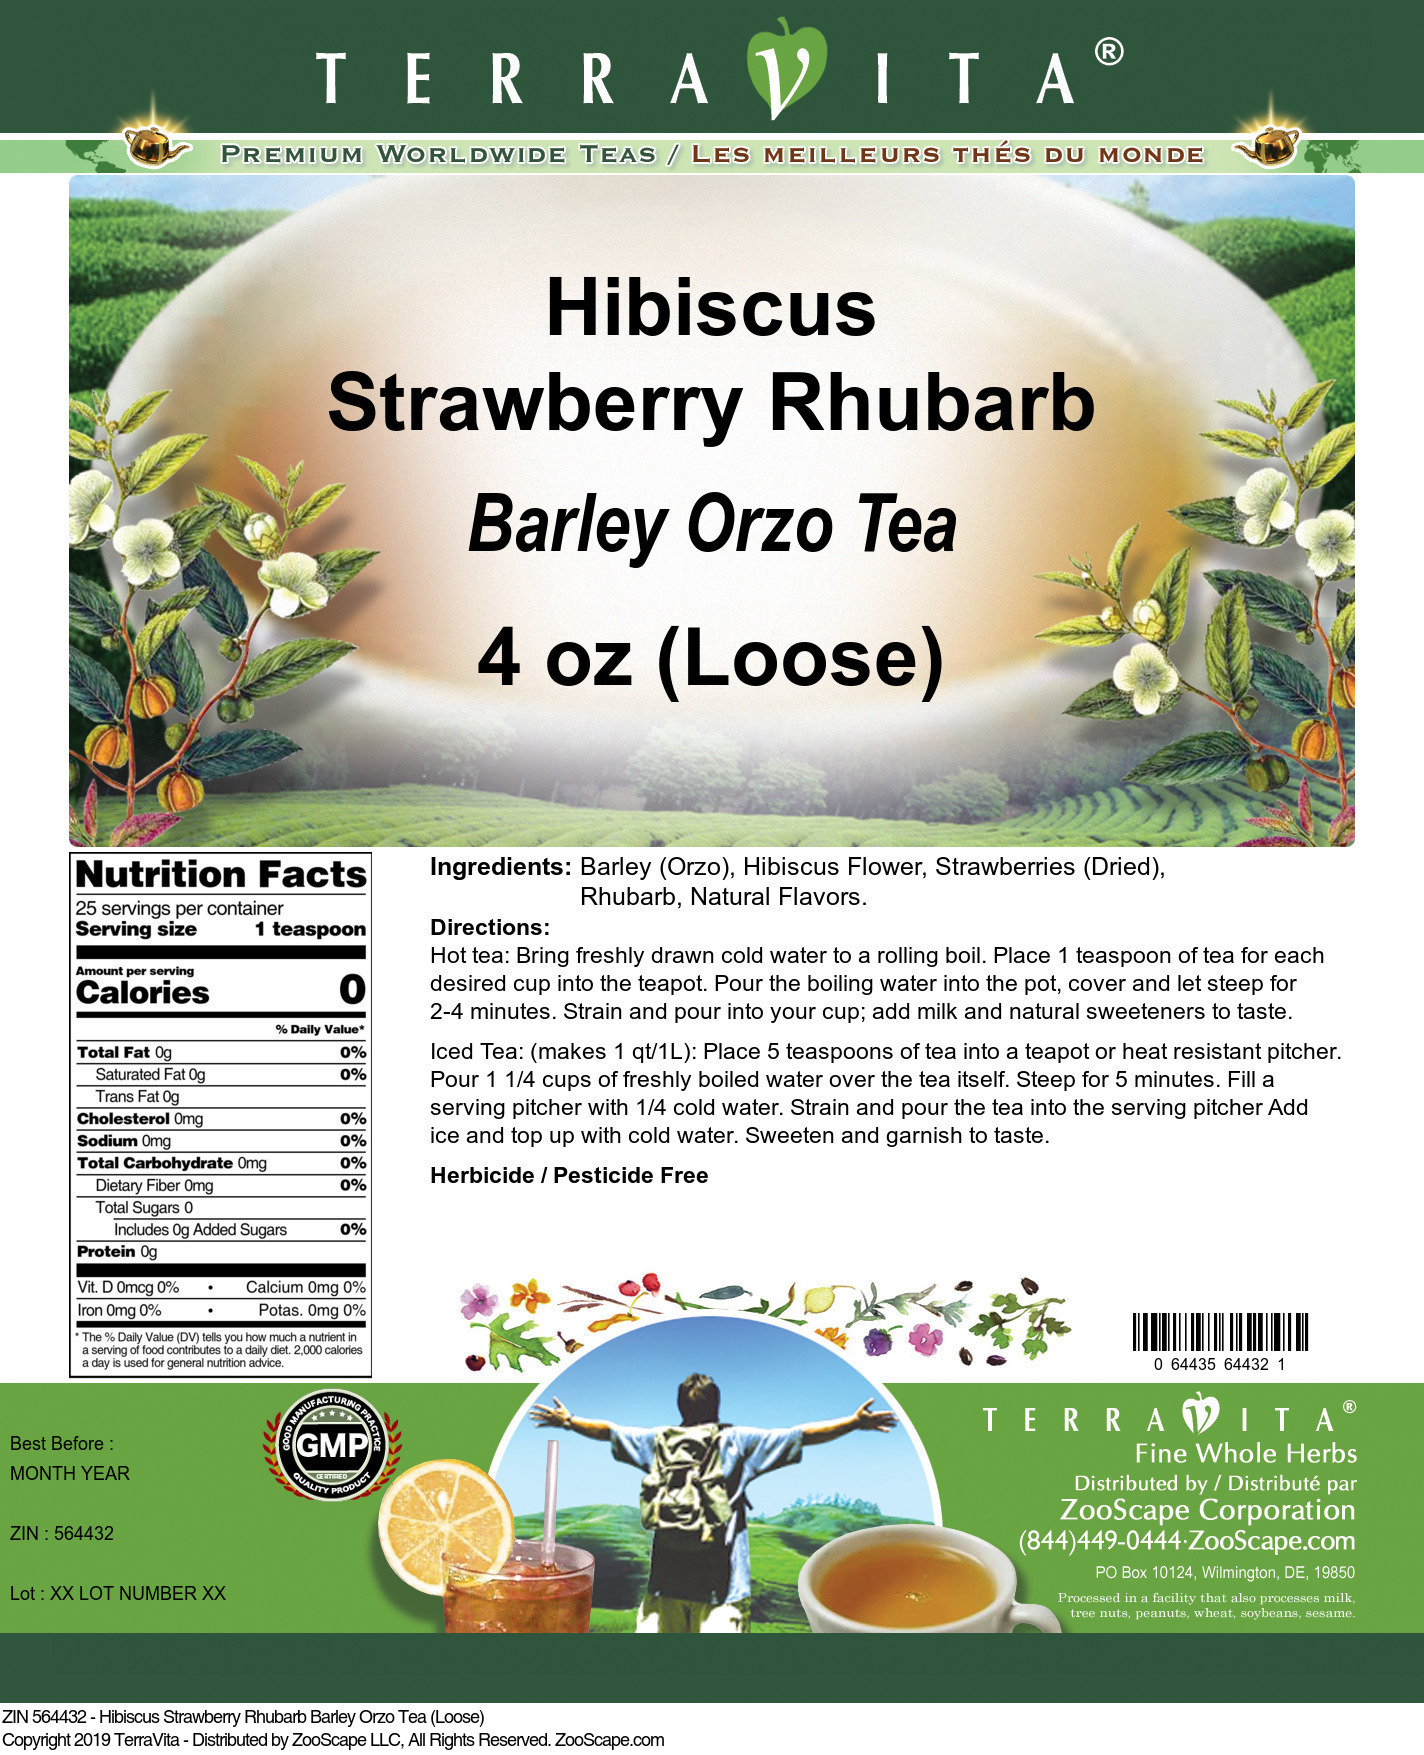 Hibiscus Strawberry Rhubarb Barley Orzo Tea (Loose) - Label